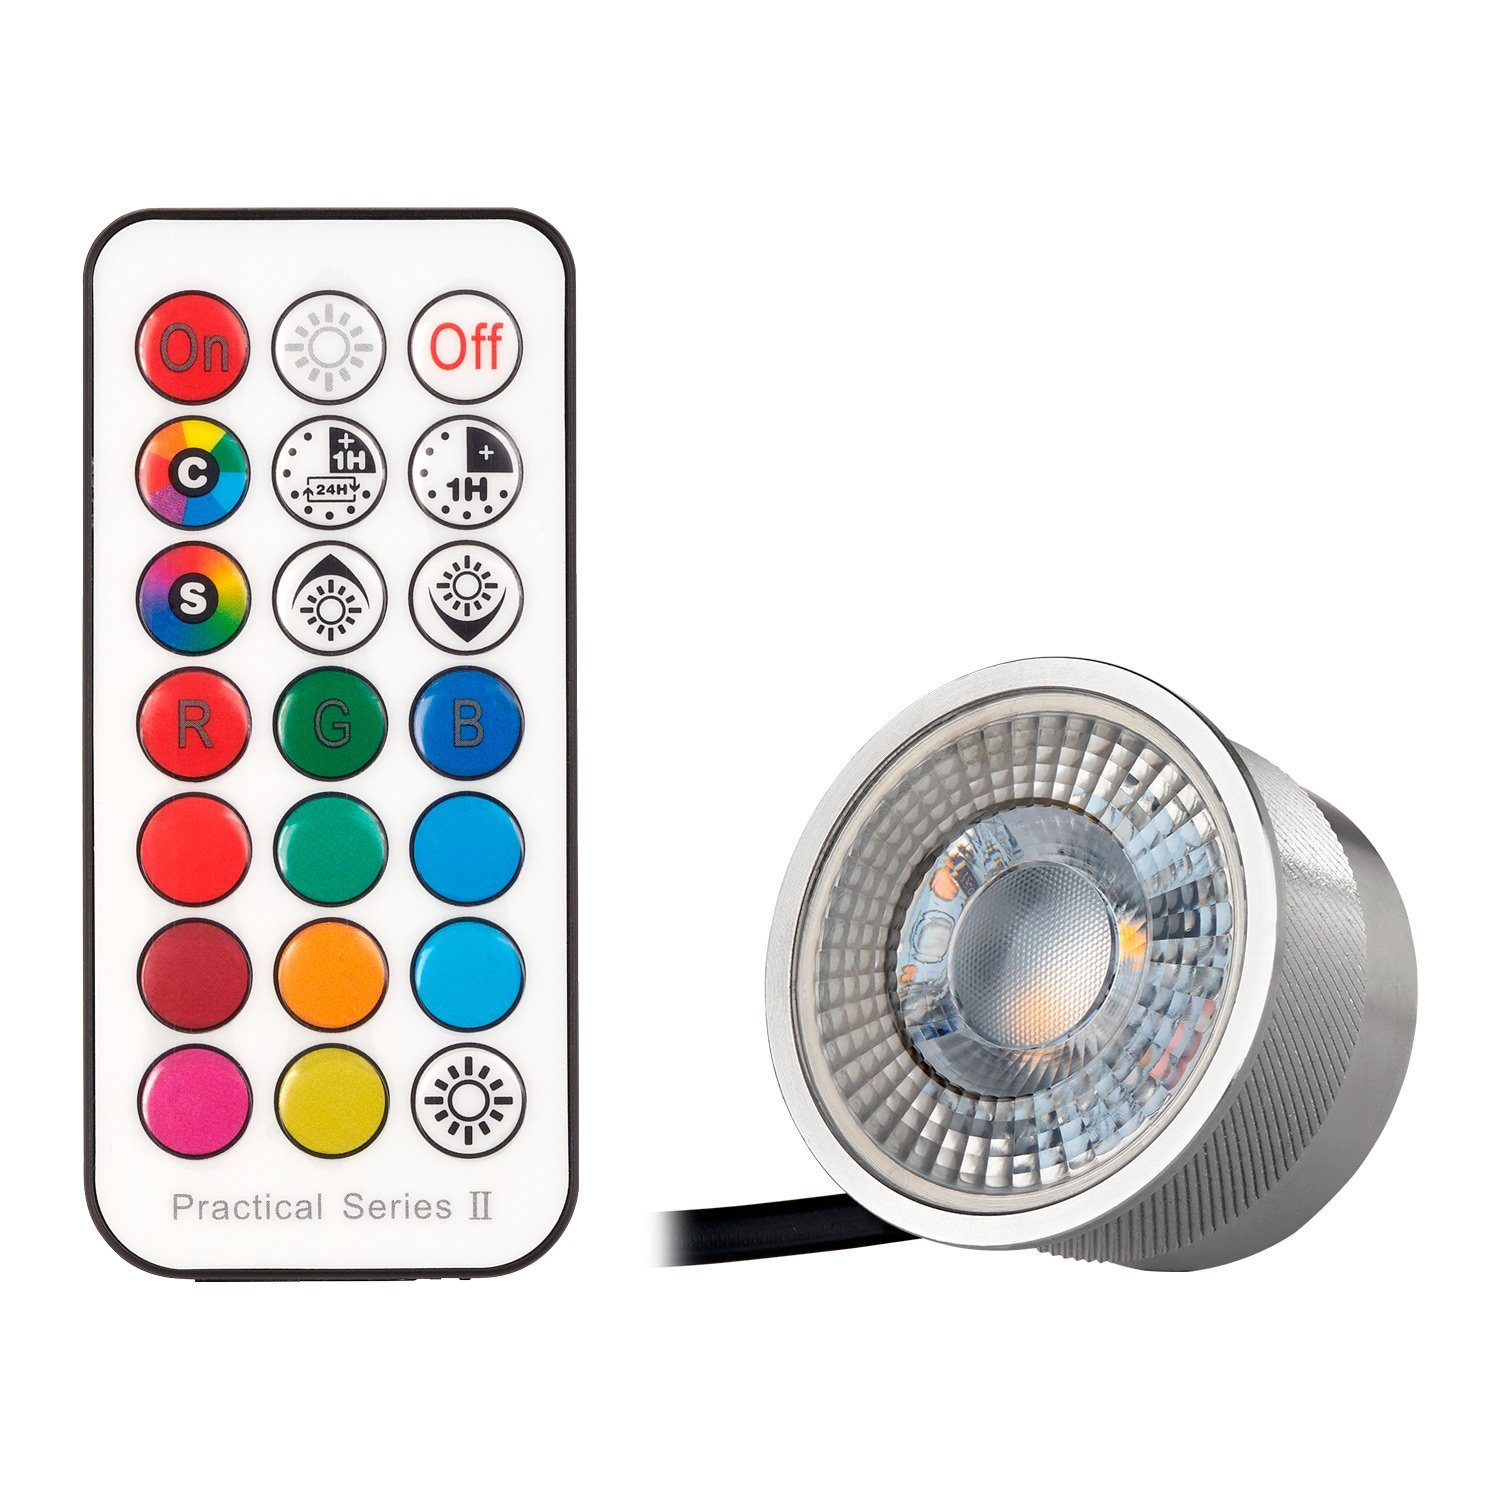 extra LED Einbaustrahler vo 3W 10er Set LED in LEDANDO matt Einbaustrahler mit RGB weiß flach LED